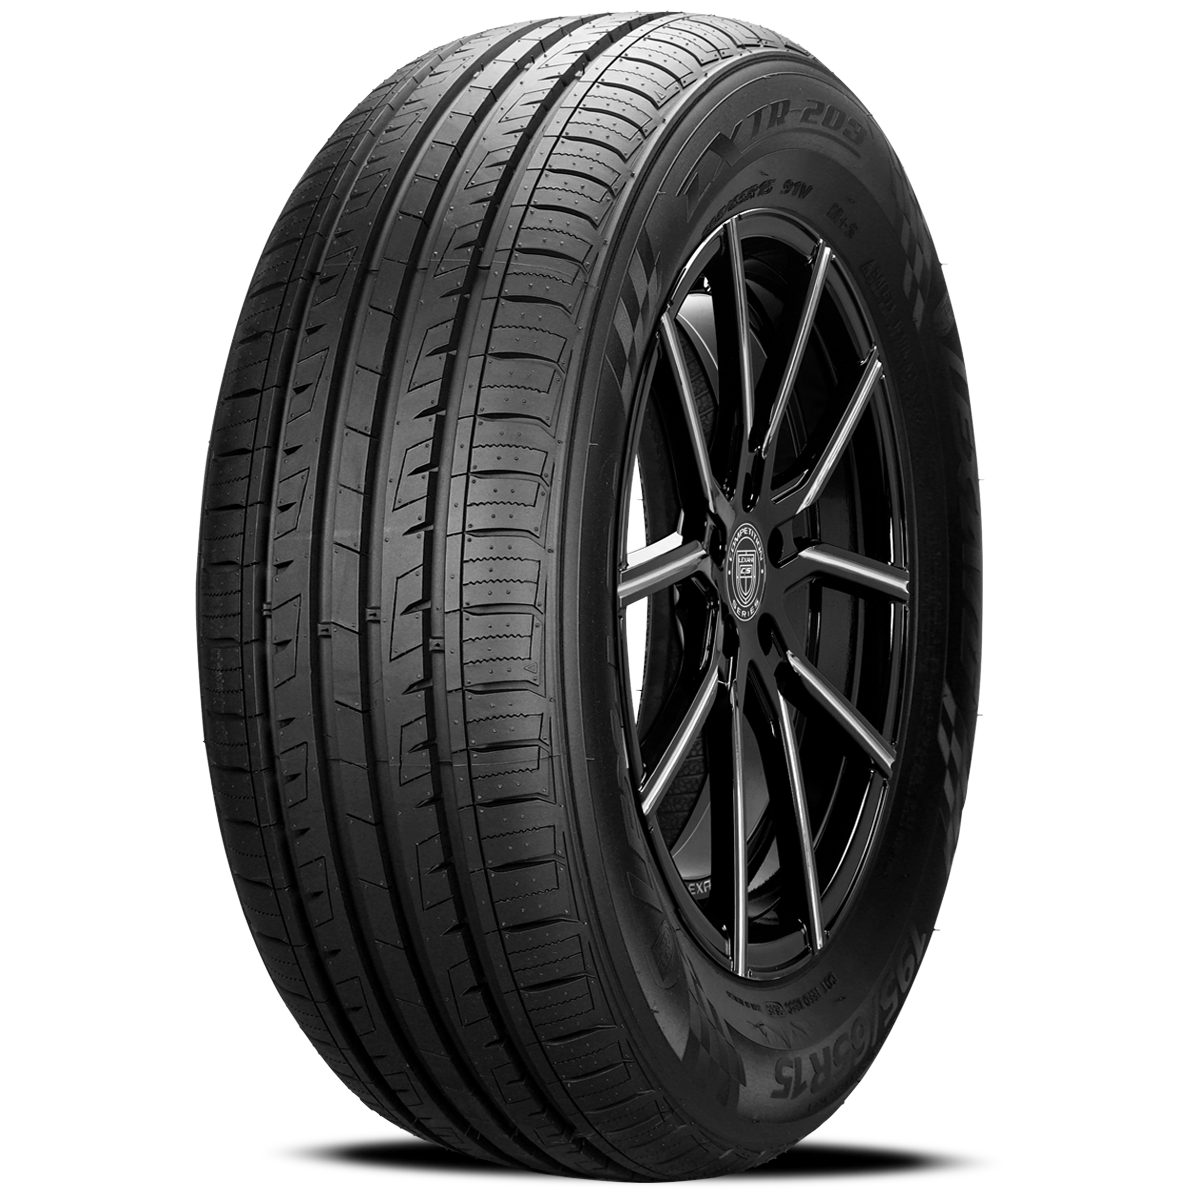 LEXANI LXTR-203 205/60R15 (24.7X8.1R 15) Tires